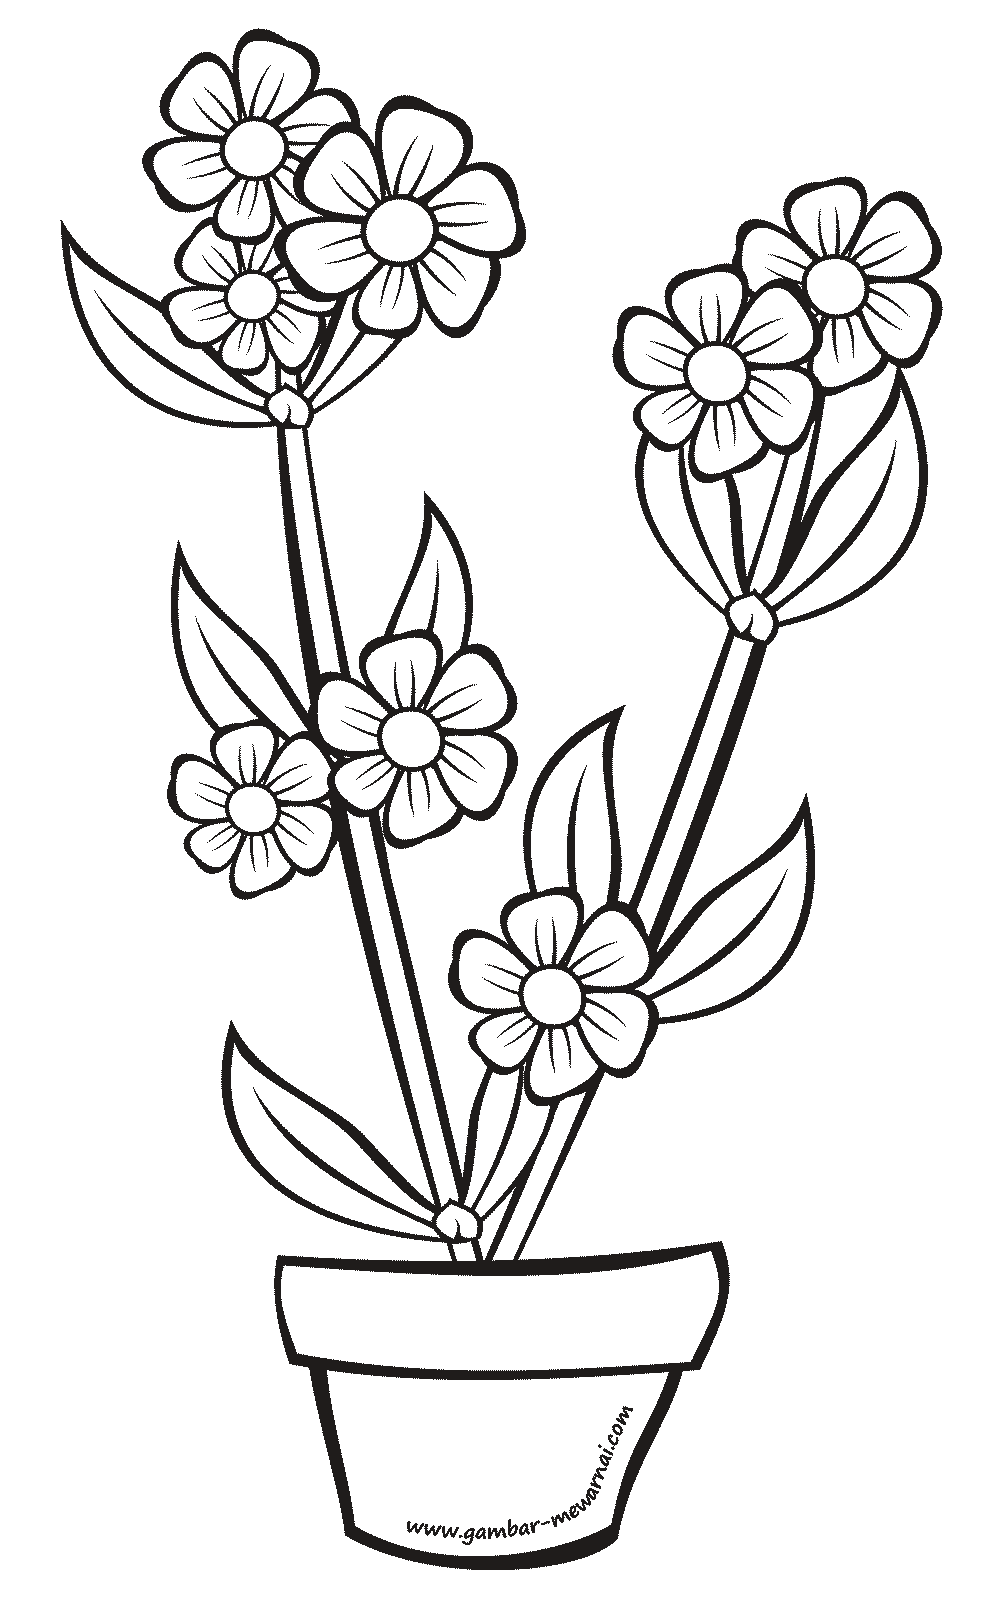 Gambar Vas Bunga Yang Mudah Digambar